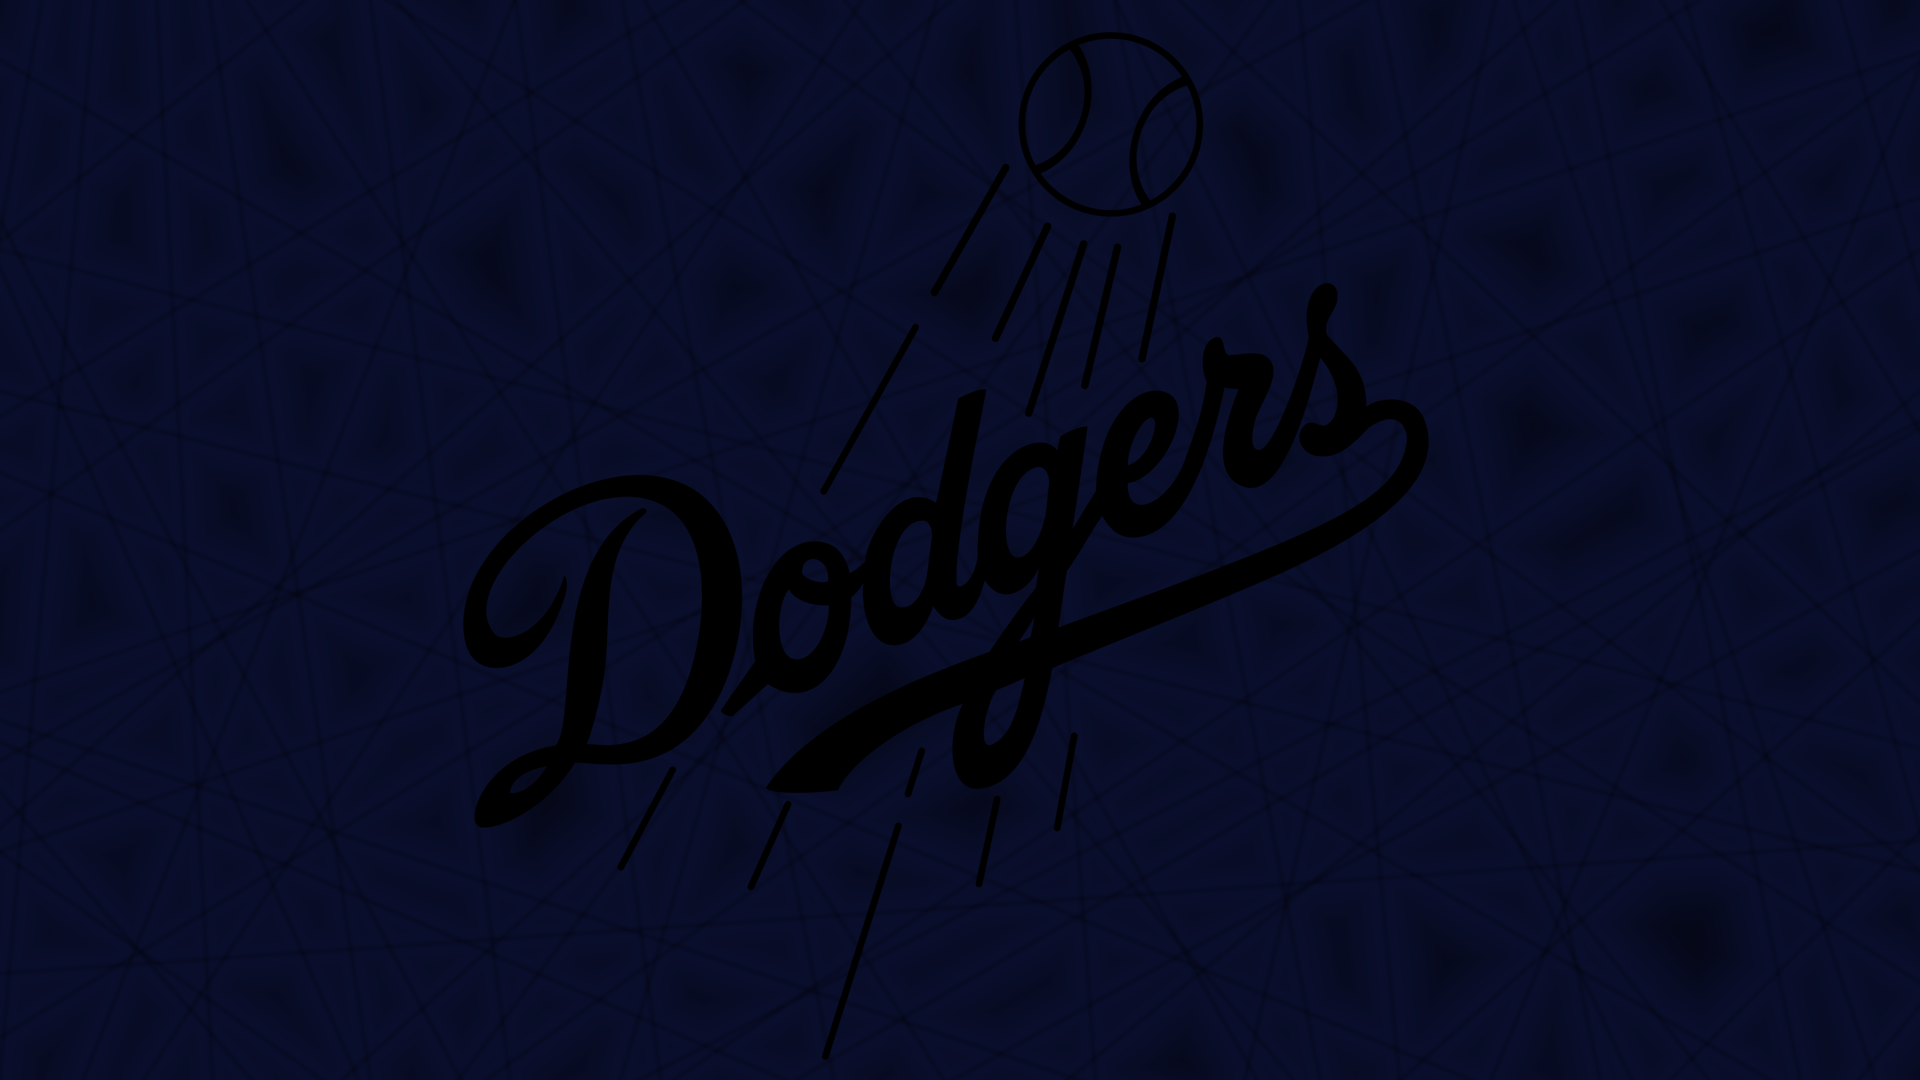 HD Los Angeles Dodgers Wallpaper Hq Database